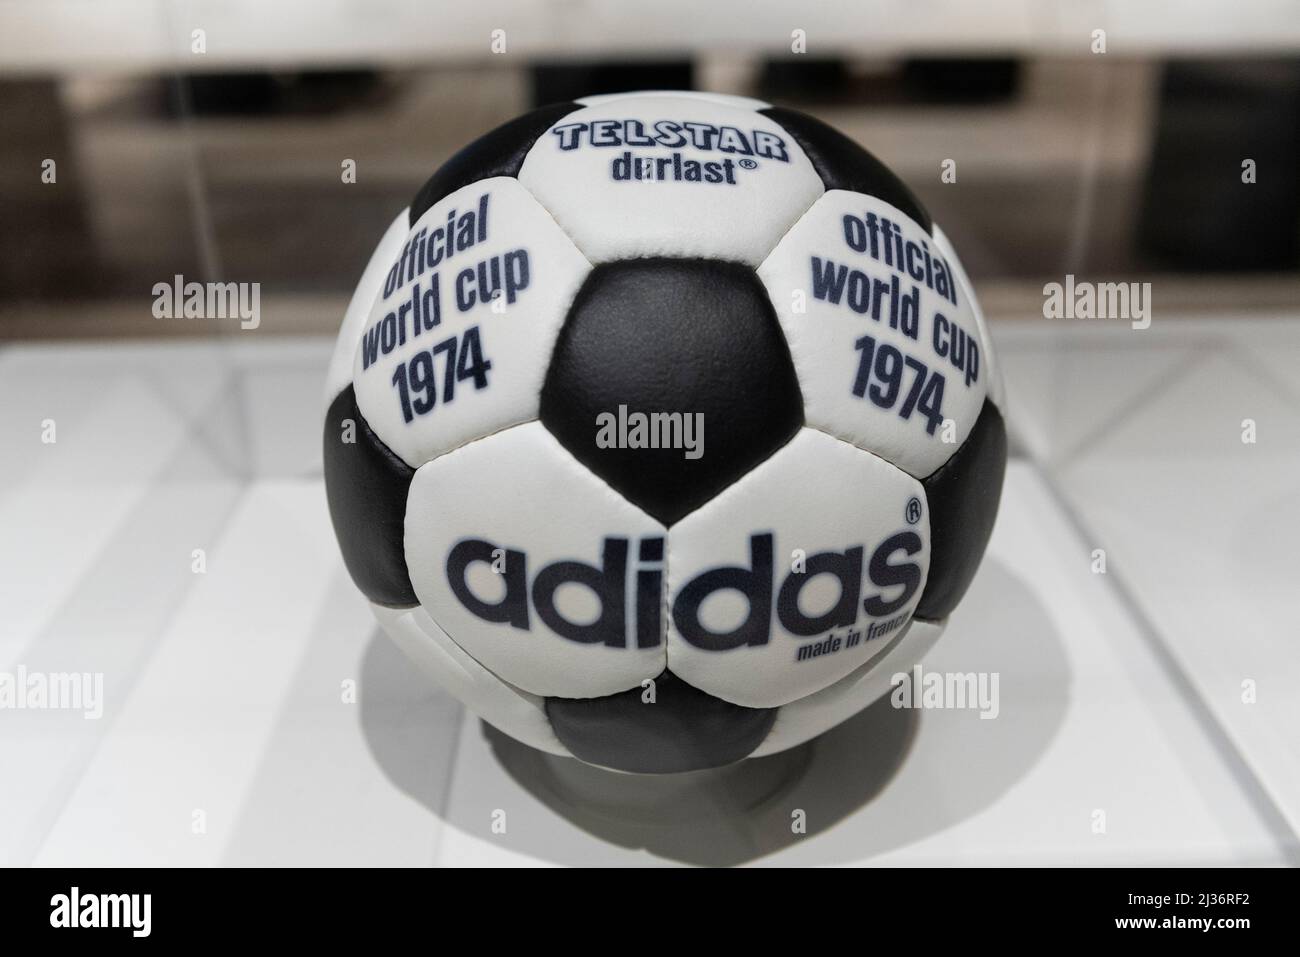 Adidas telstar football hi-res stock photography and images - Alamy